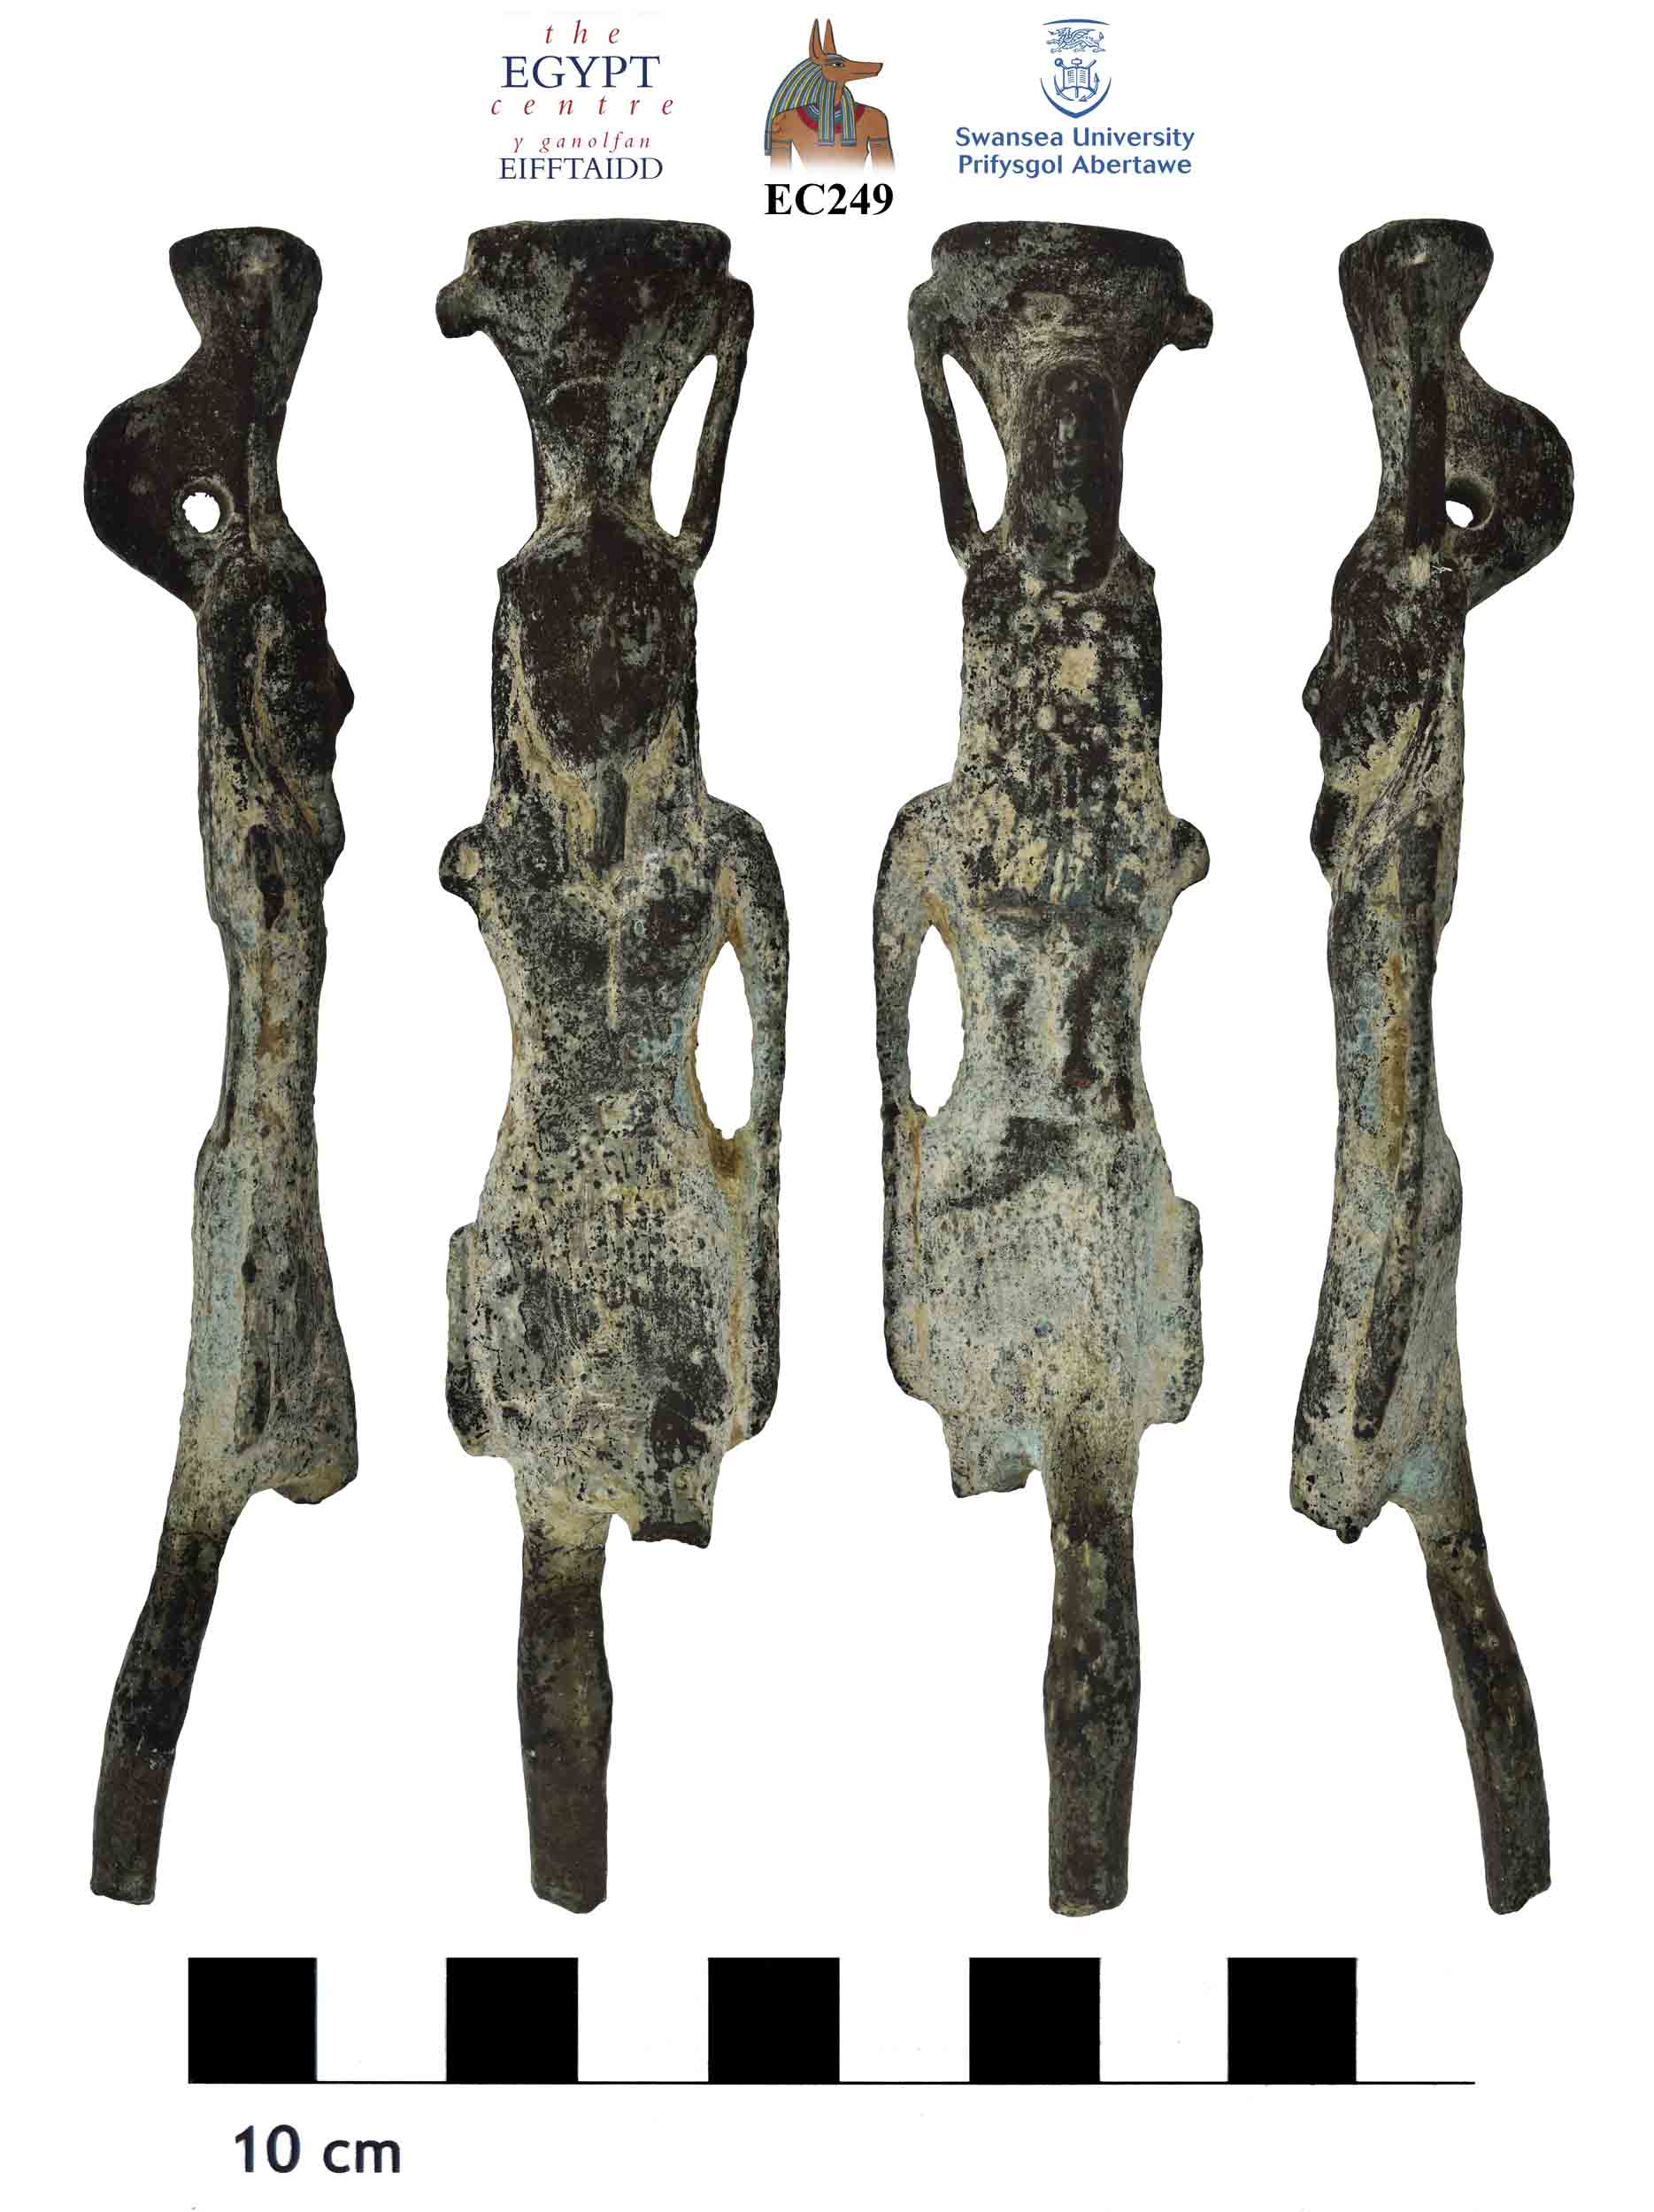 Image for: Statue of Nefertum